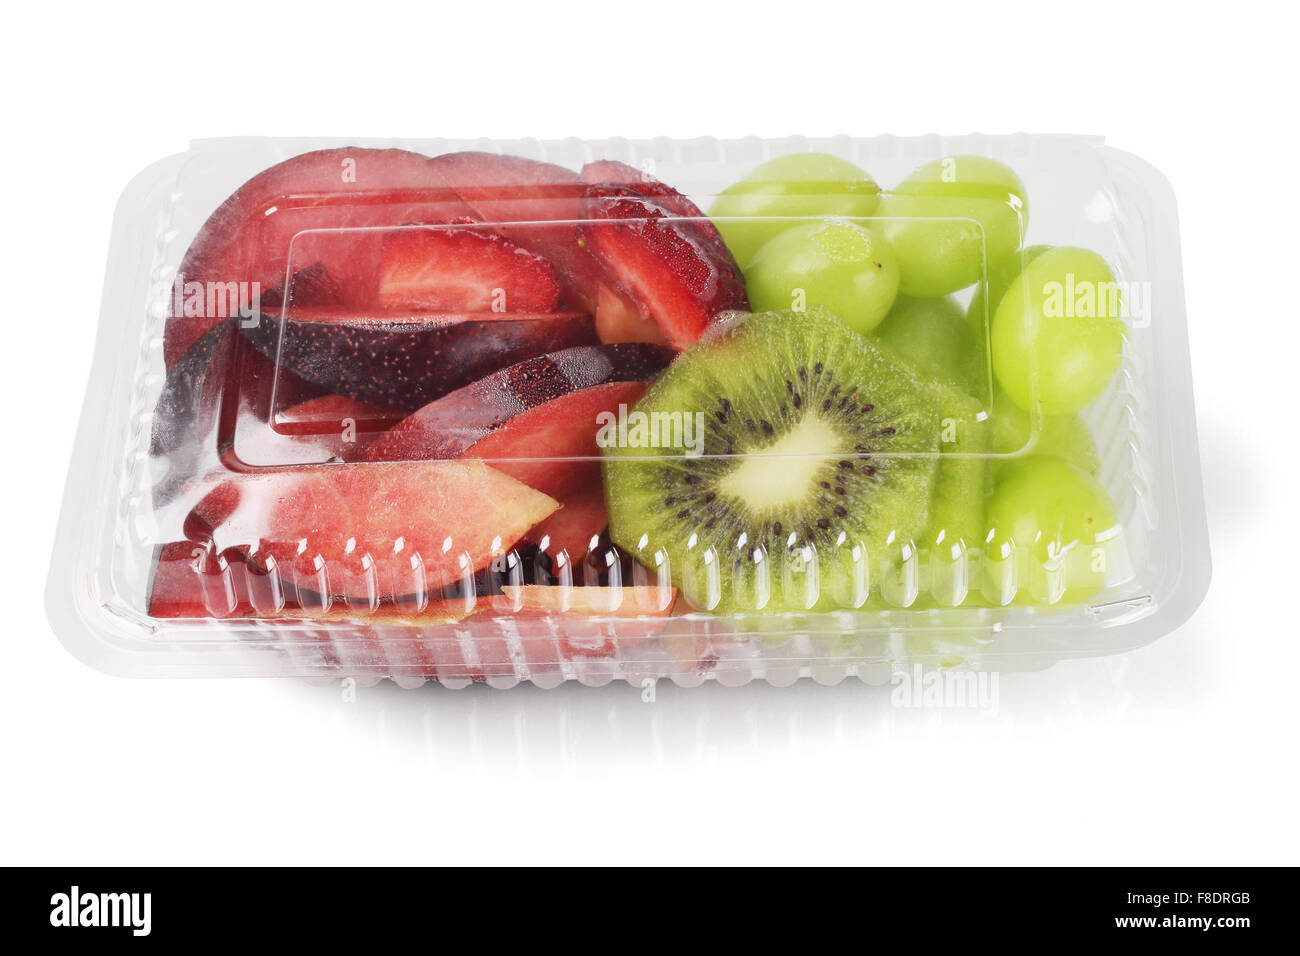 https://c8.alamy.com/comp/F8DRGB/mixed-cut-fruits-in-plastic-box-on-white-background-F8DRGB.jpg